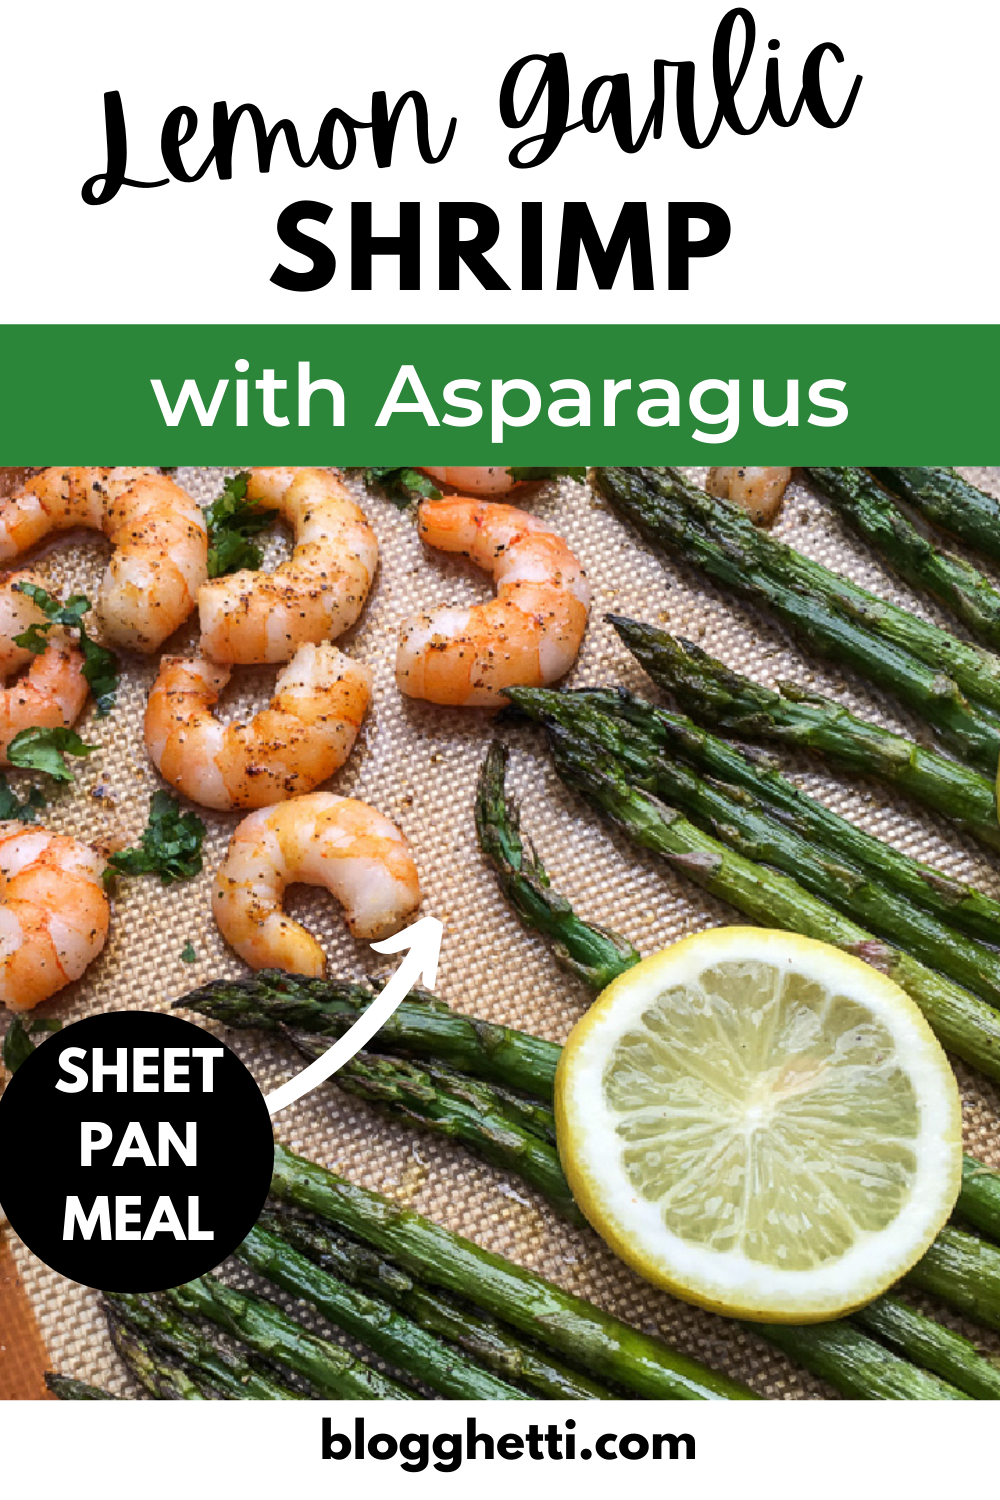 Sheet Pan Shrimp and Asparagus Recipe